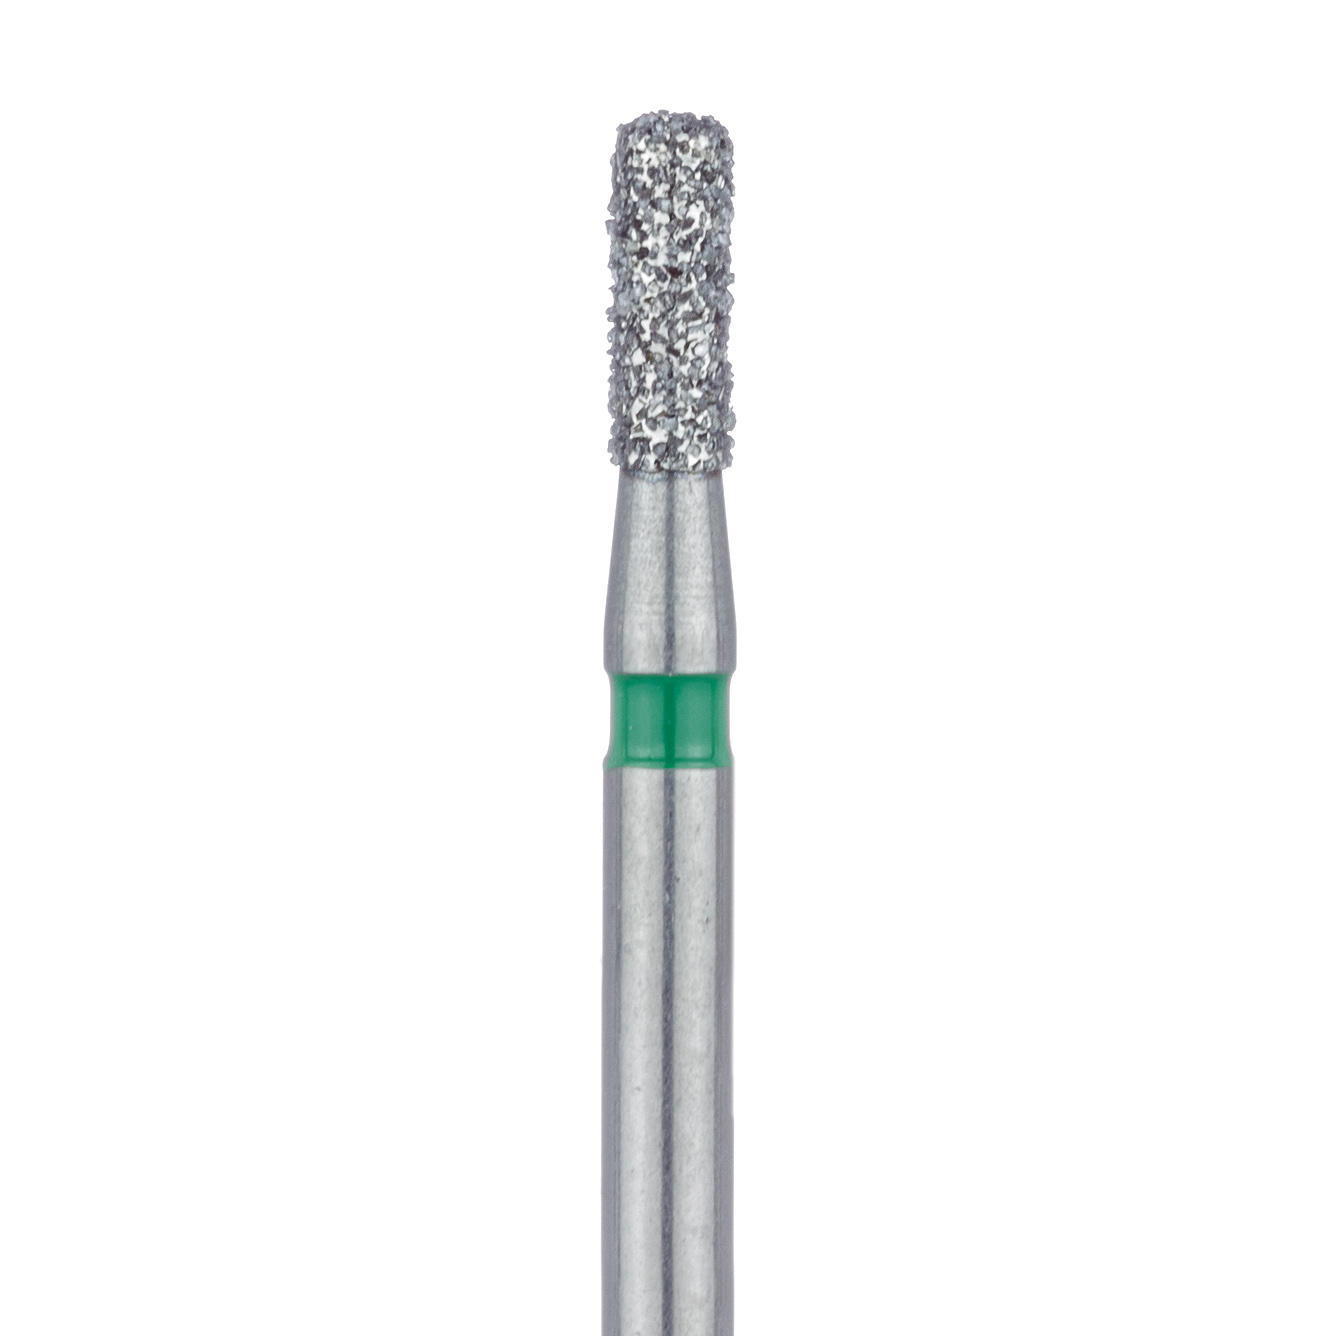 840G-016-FG Round Edge Cylinder Diamond Bur, 1.6mm Ø, Coarse, FG